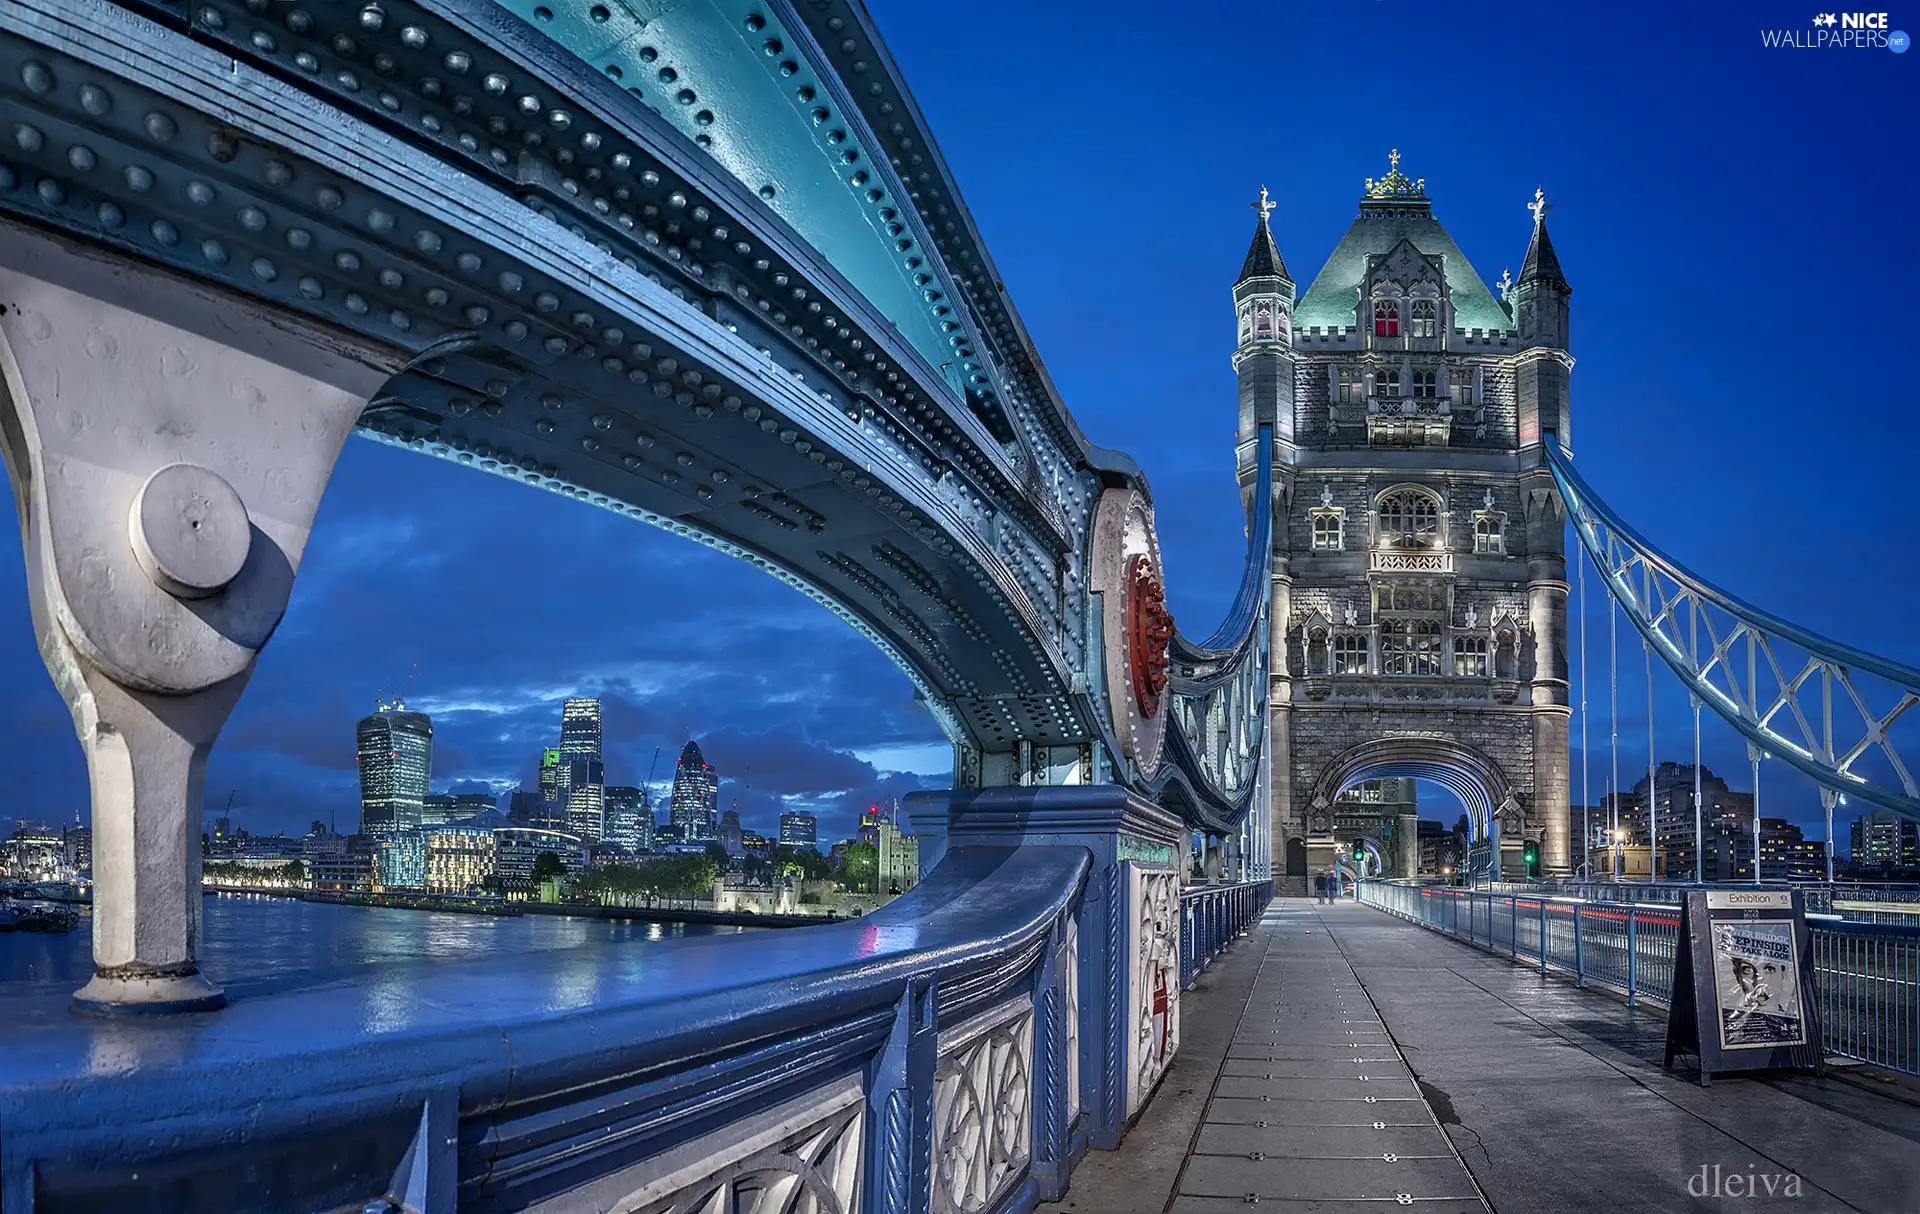 London, City at Night, Tower Bridge, bridge